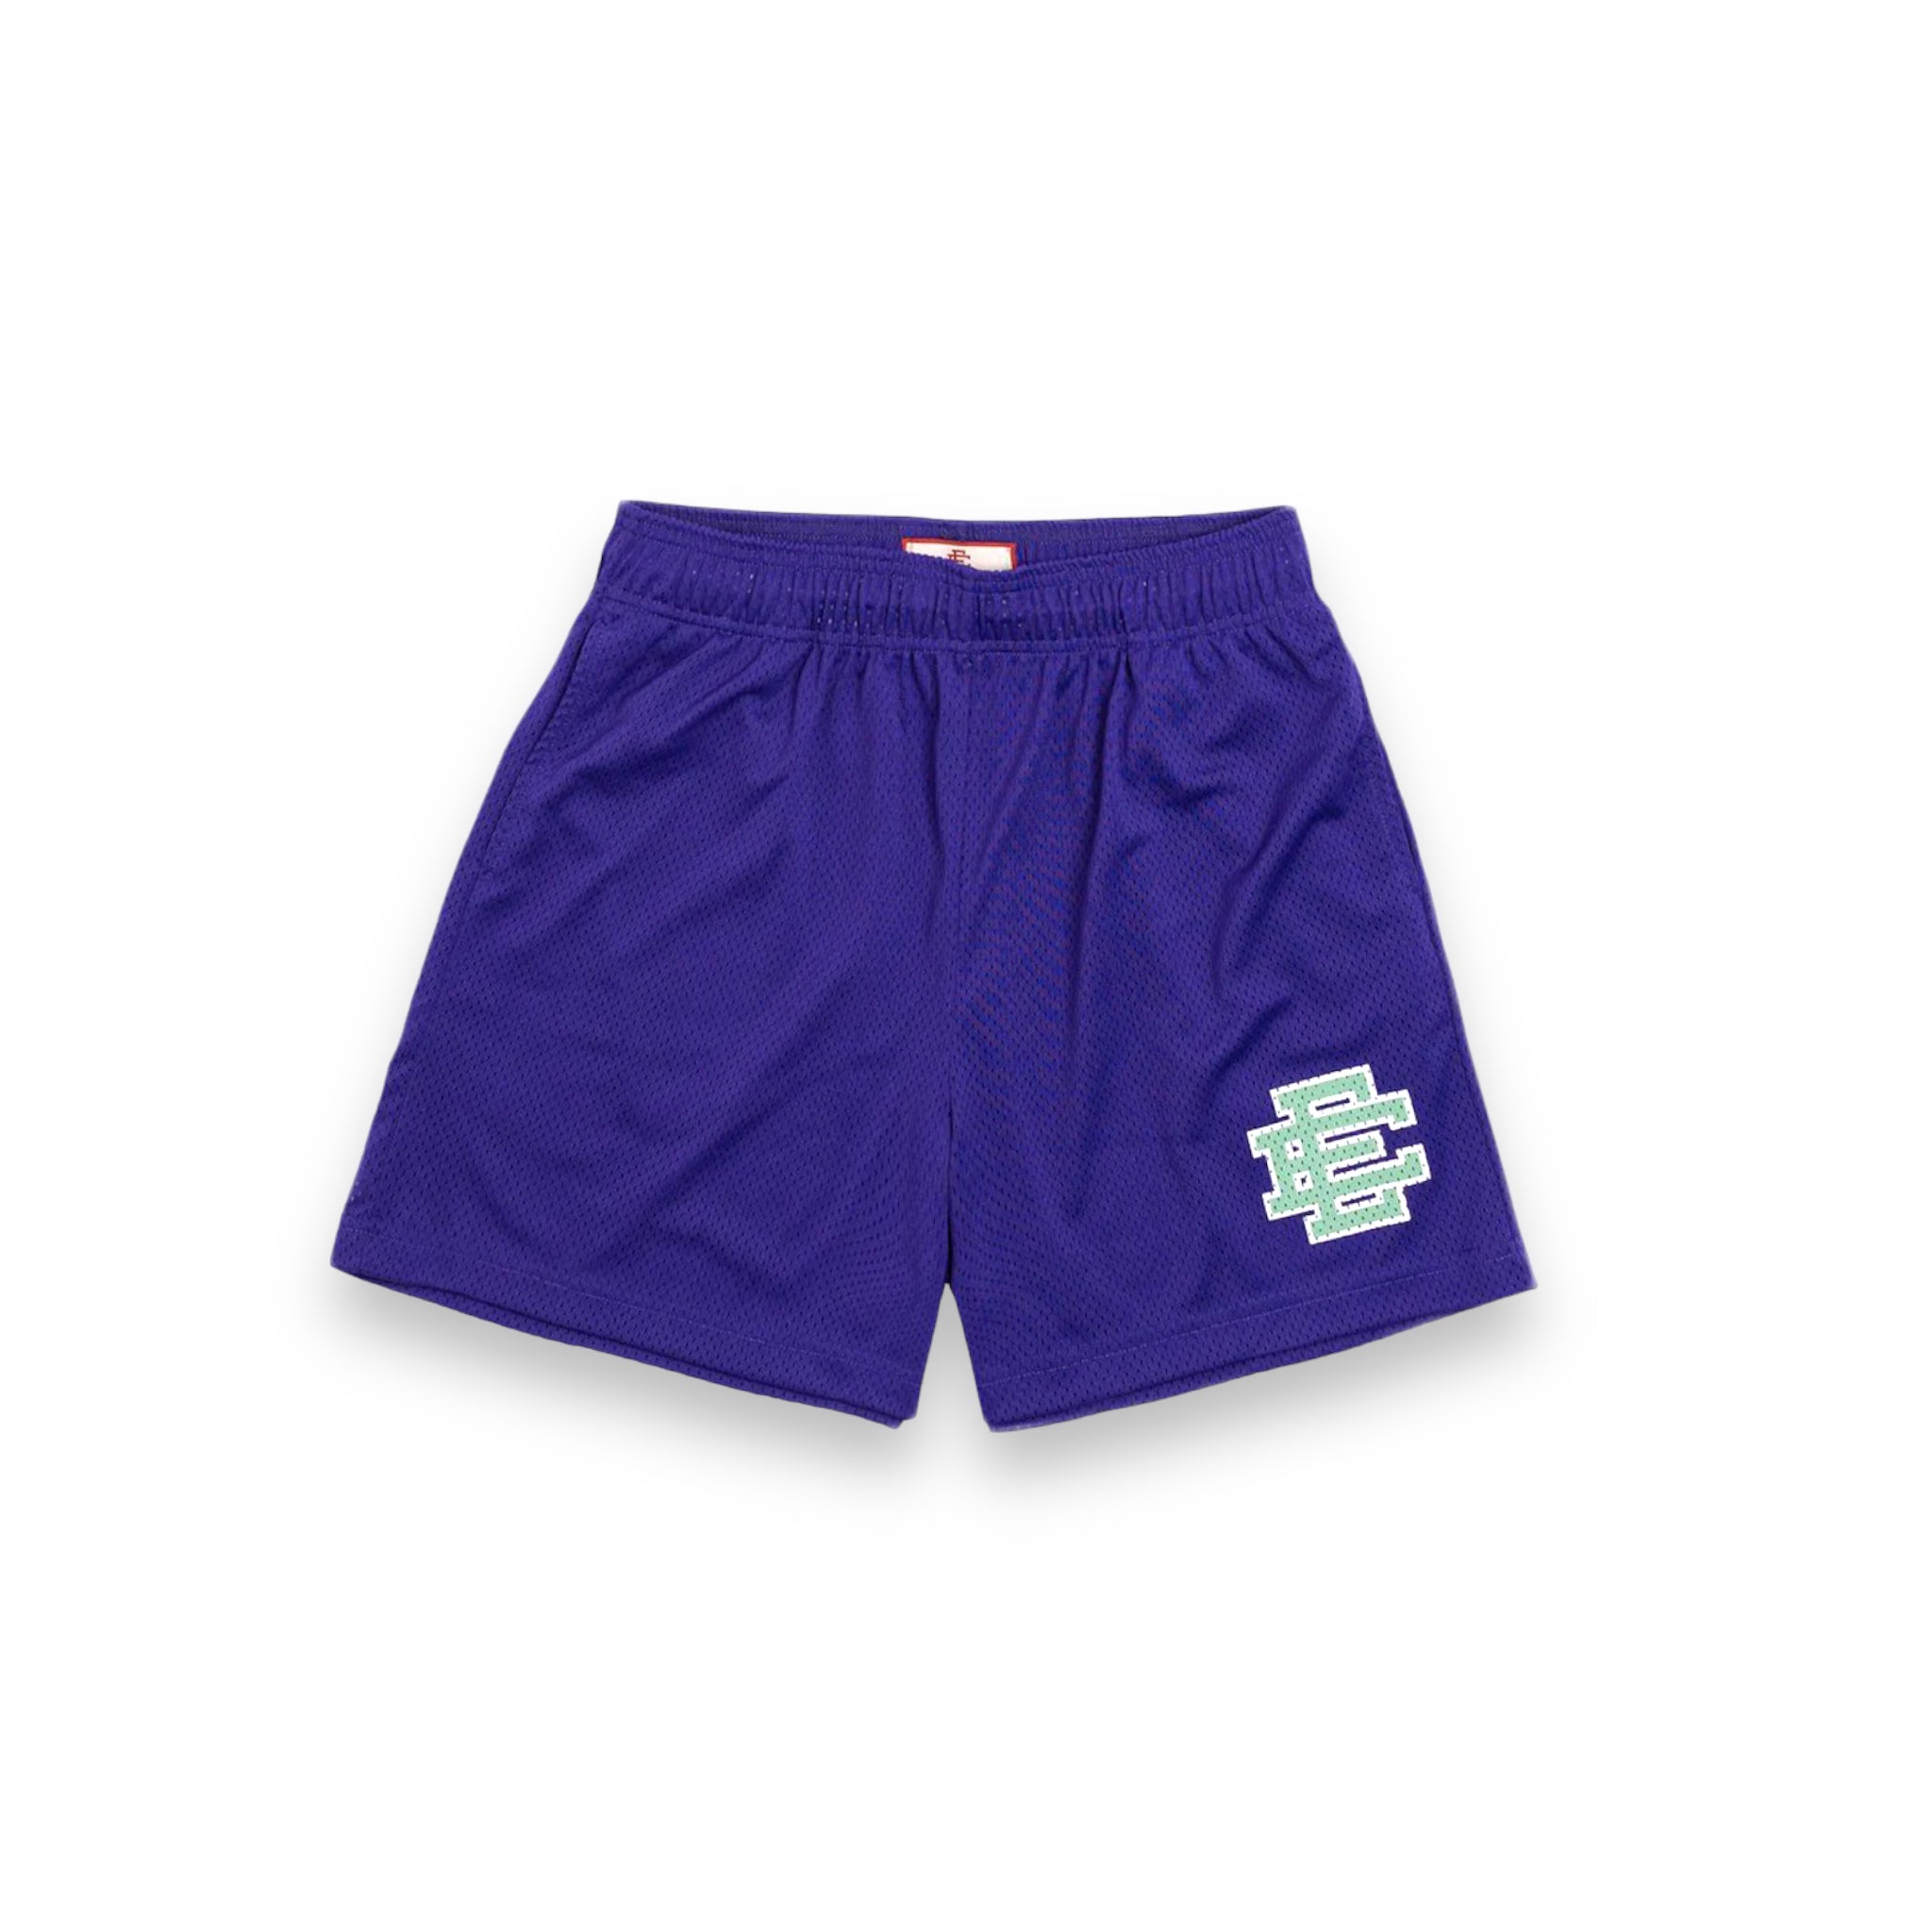 Eric Emanuel Purple/Green Shorts